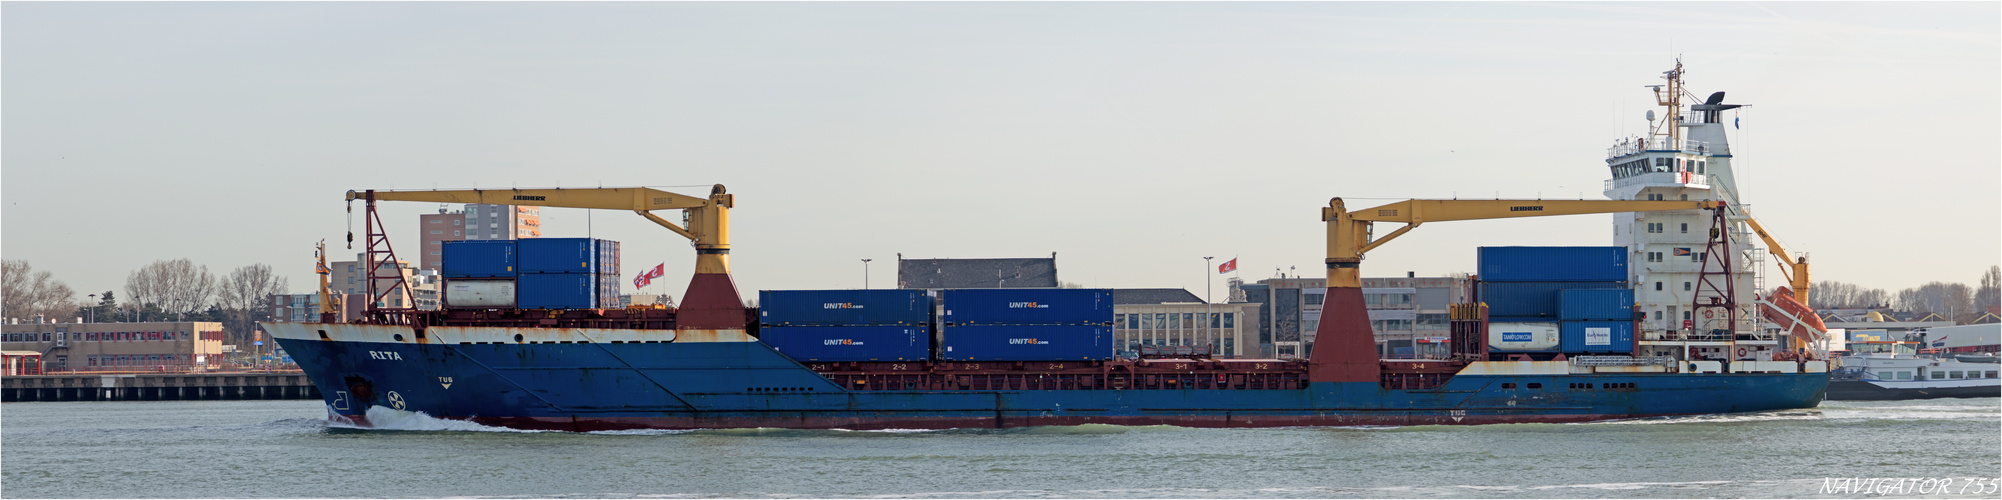 Container Ship RITA, Rotterdam.